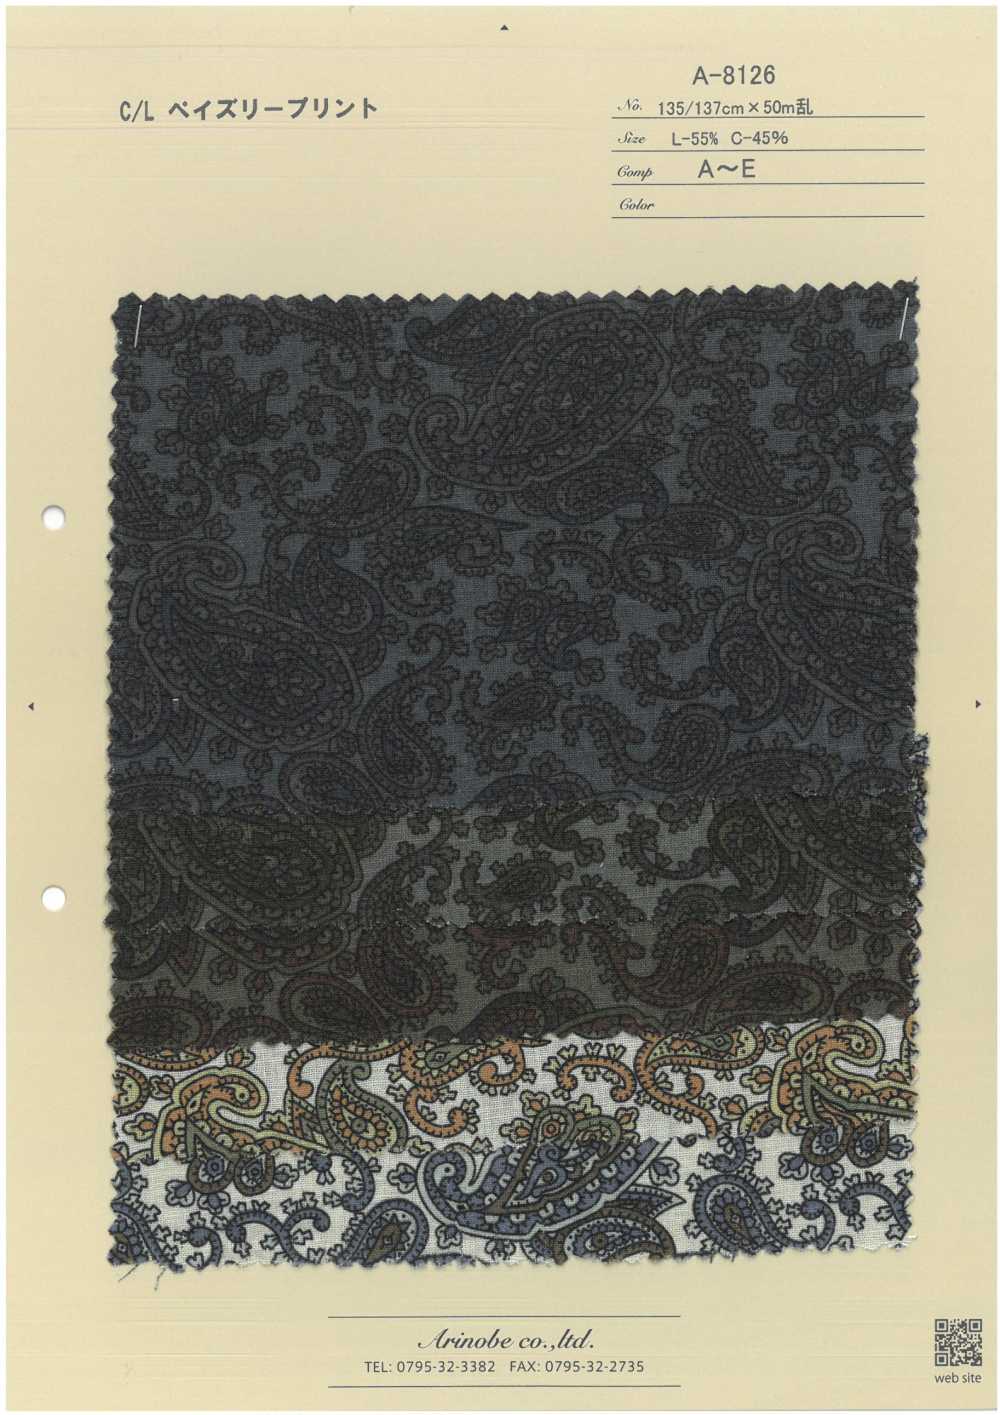 A-8126 C/L Paisley-Druck[Textilgewebe] ARINOBE CO., LTD.